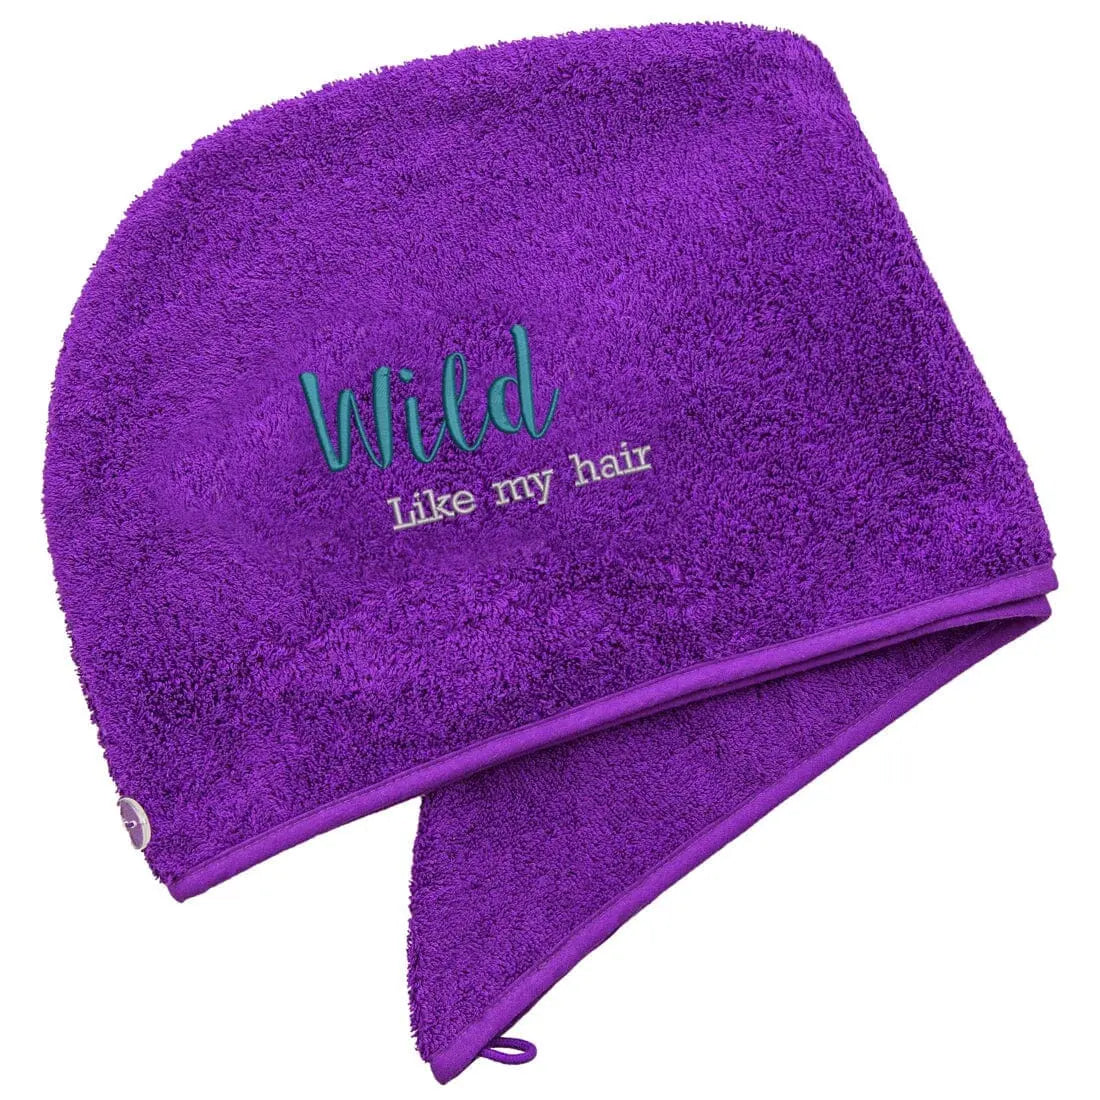 turban for hair towel in purple